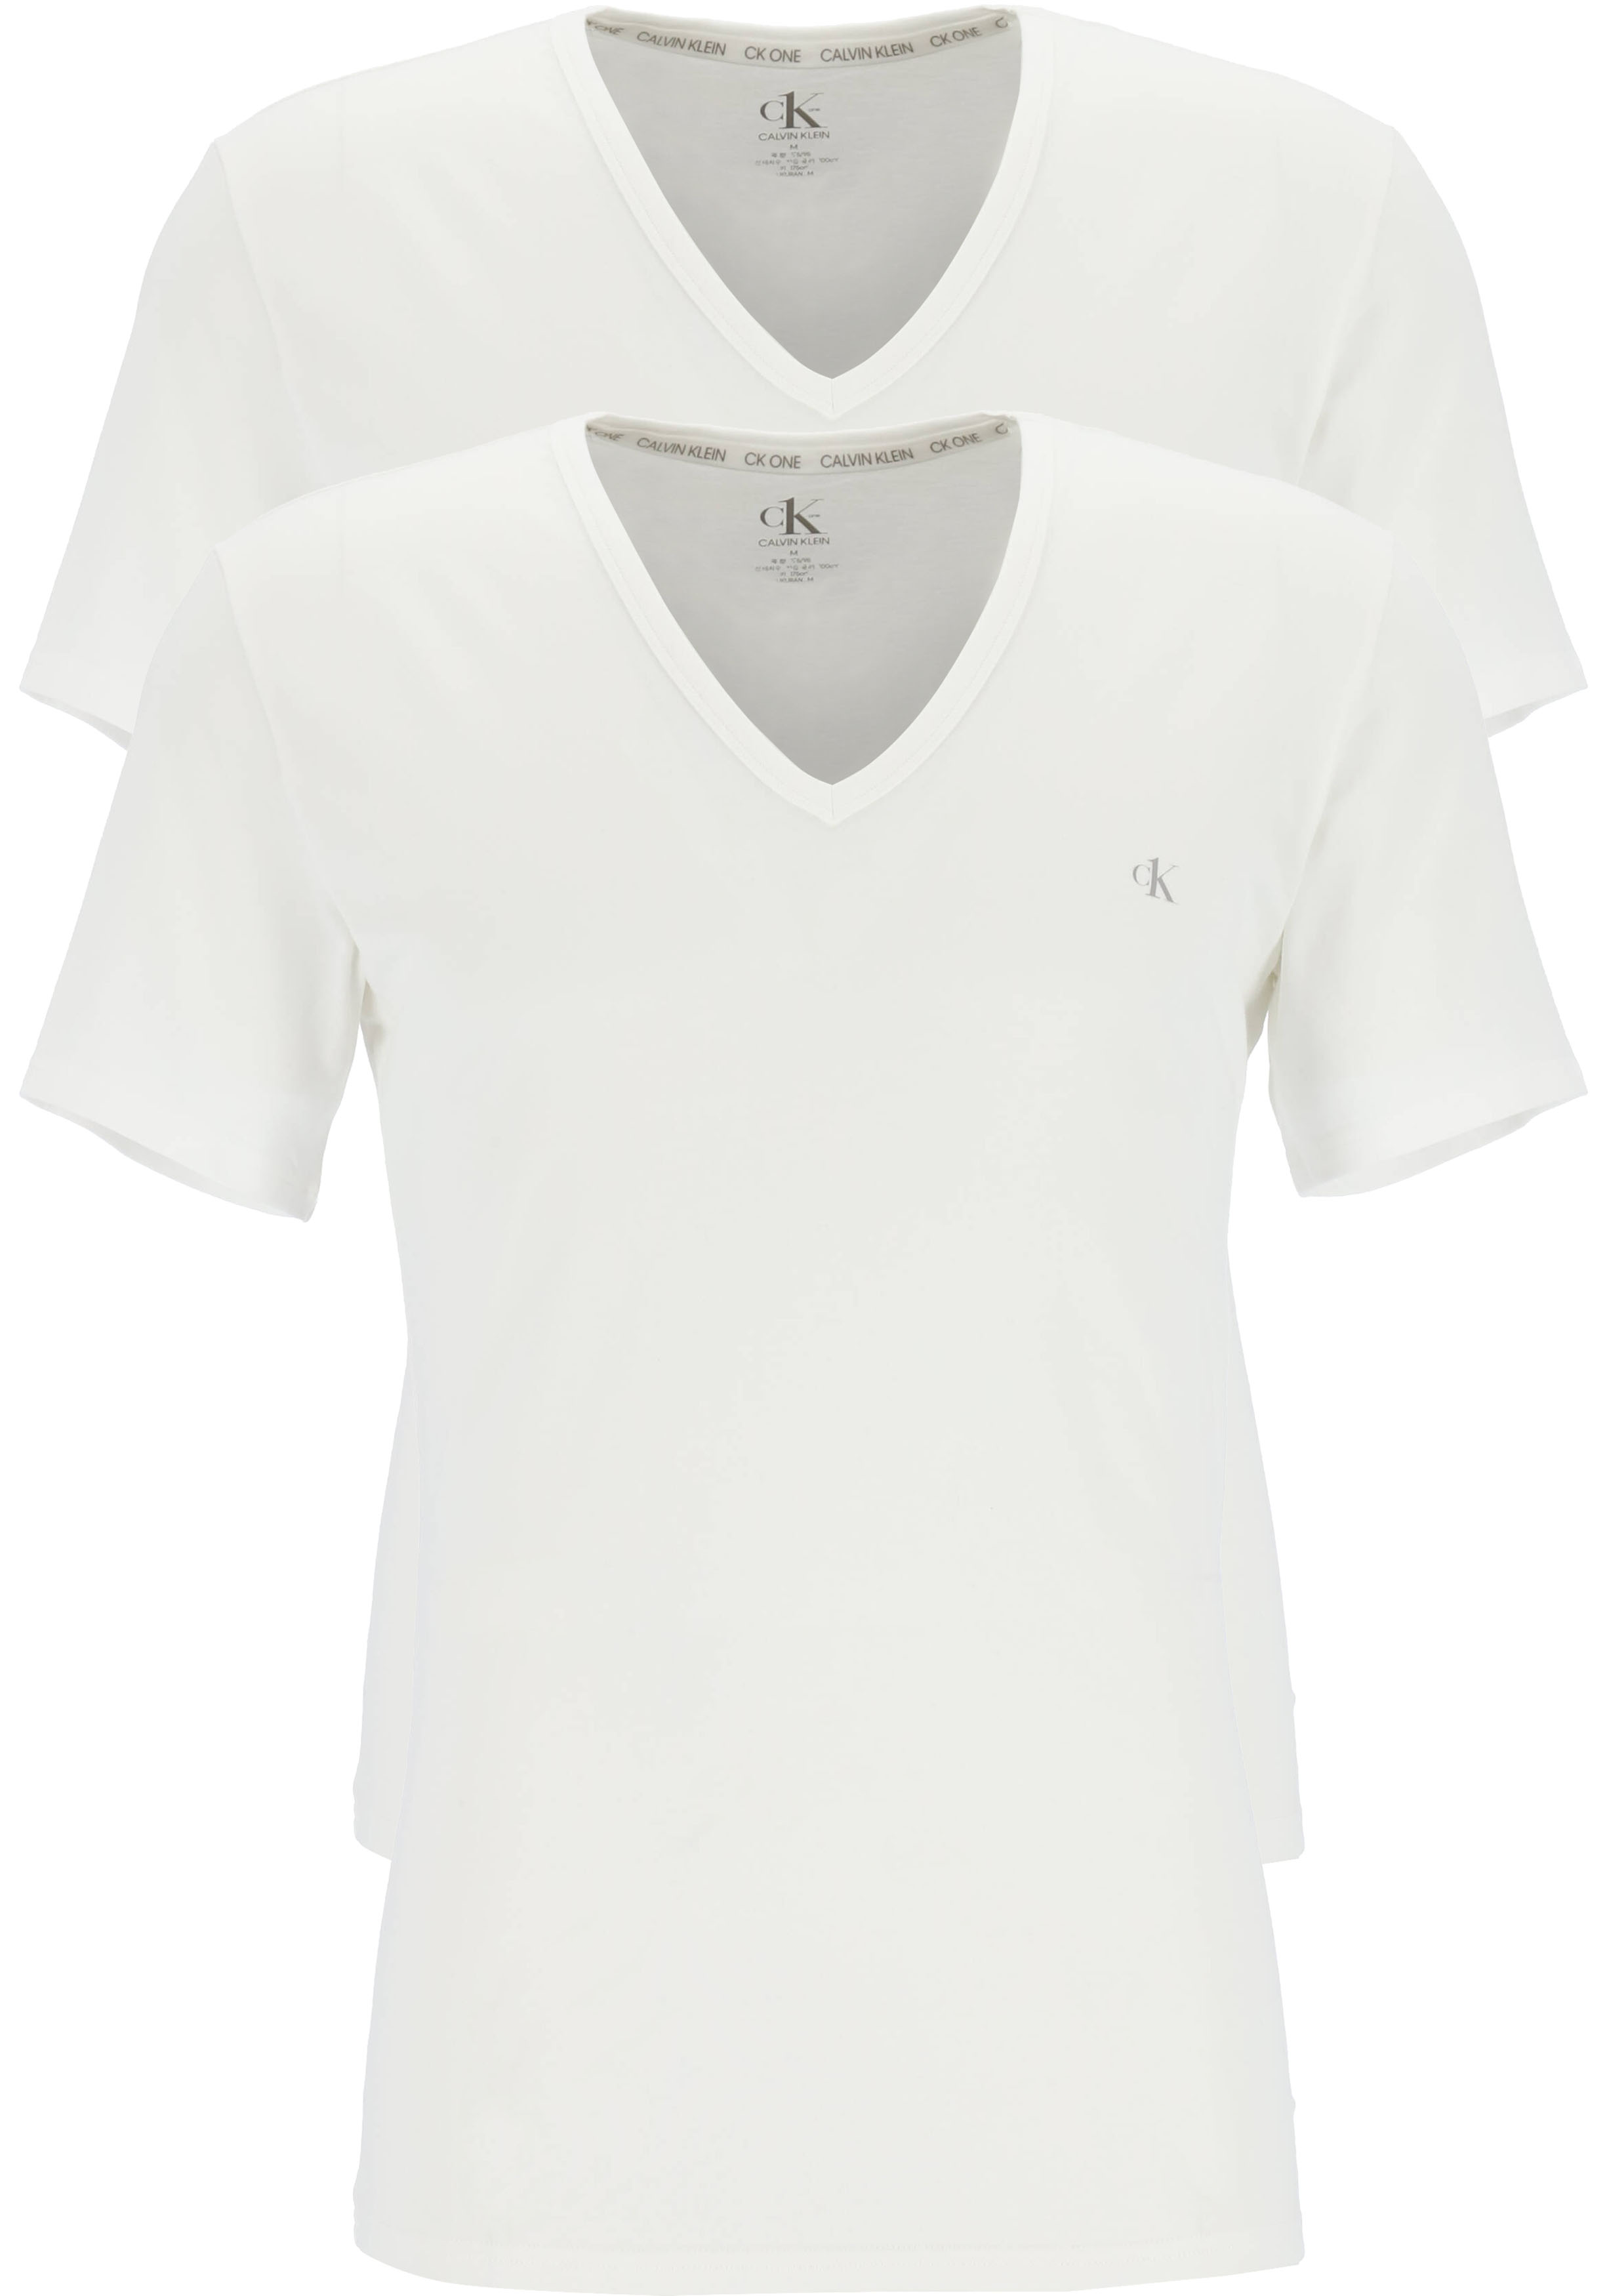 Calvin Klein CK ONE cotton V- neck T-shirts (2-pack), heren T-shirts V-hals, wit